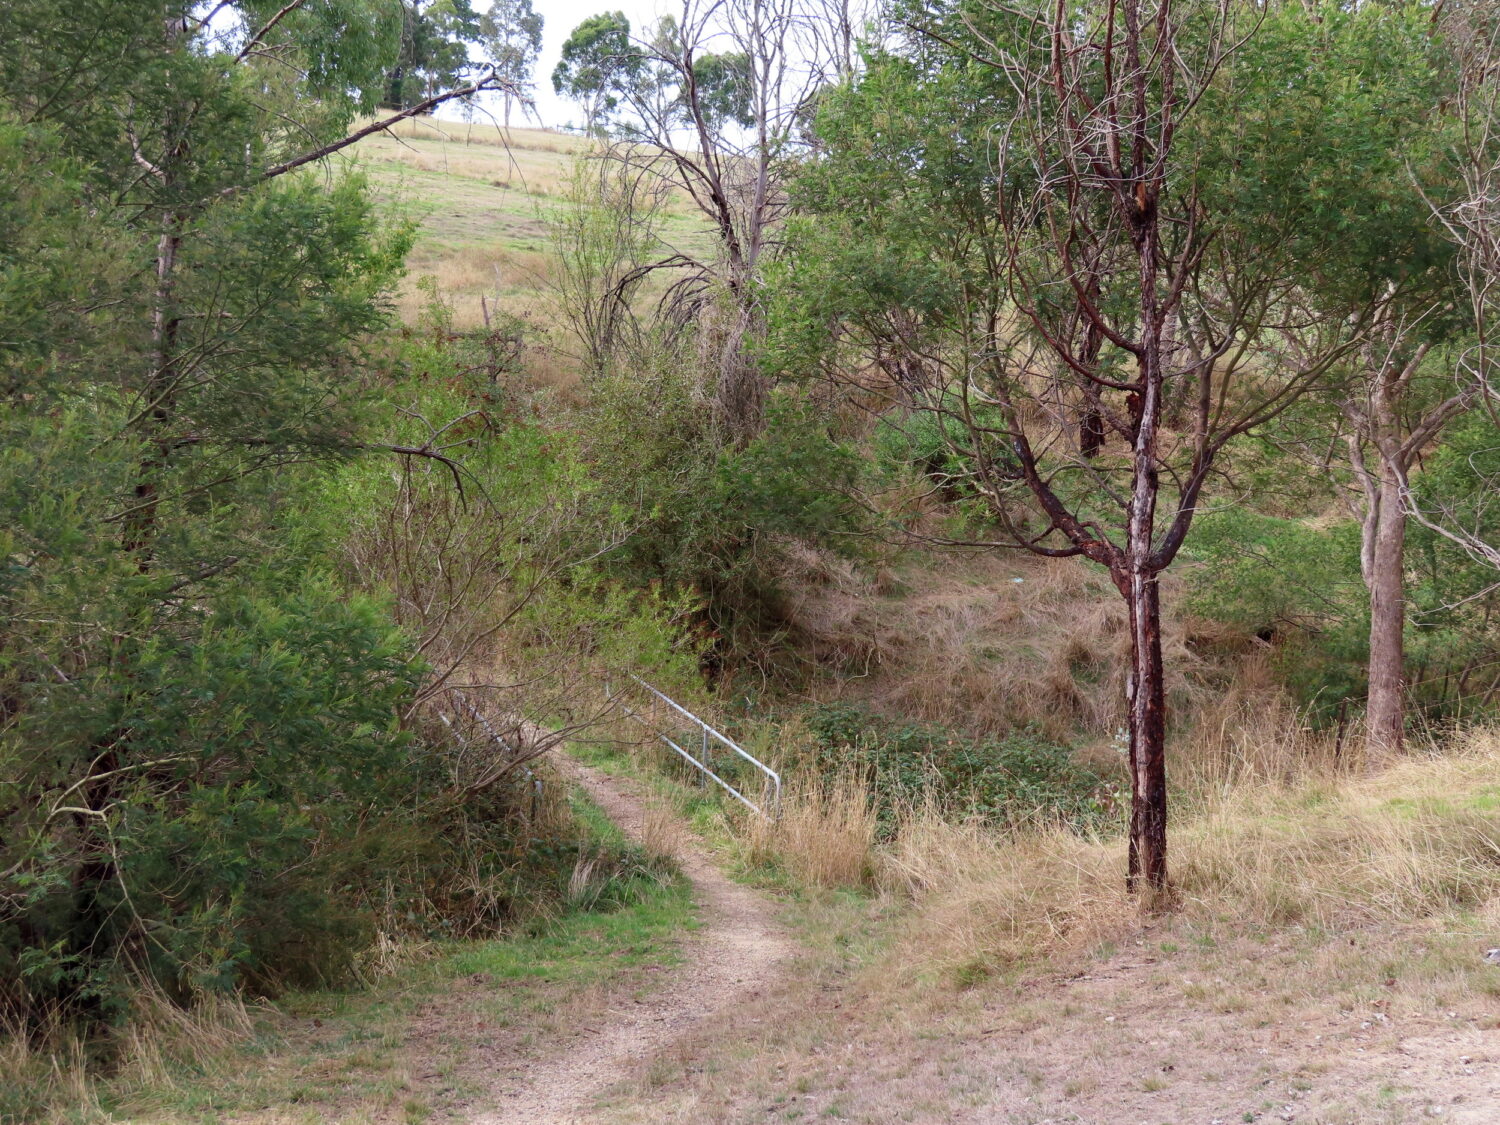 The "bridge" across the gully bottom. Grahams Road, Kangaroo Ground walk, April 2022.